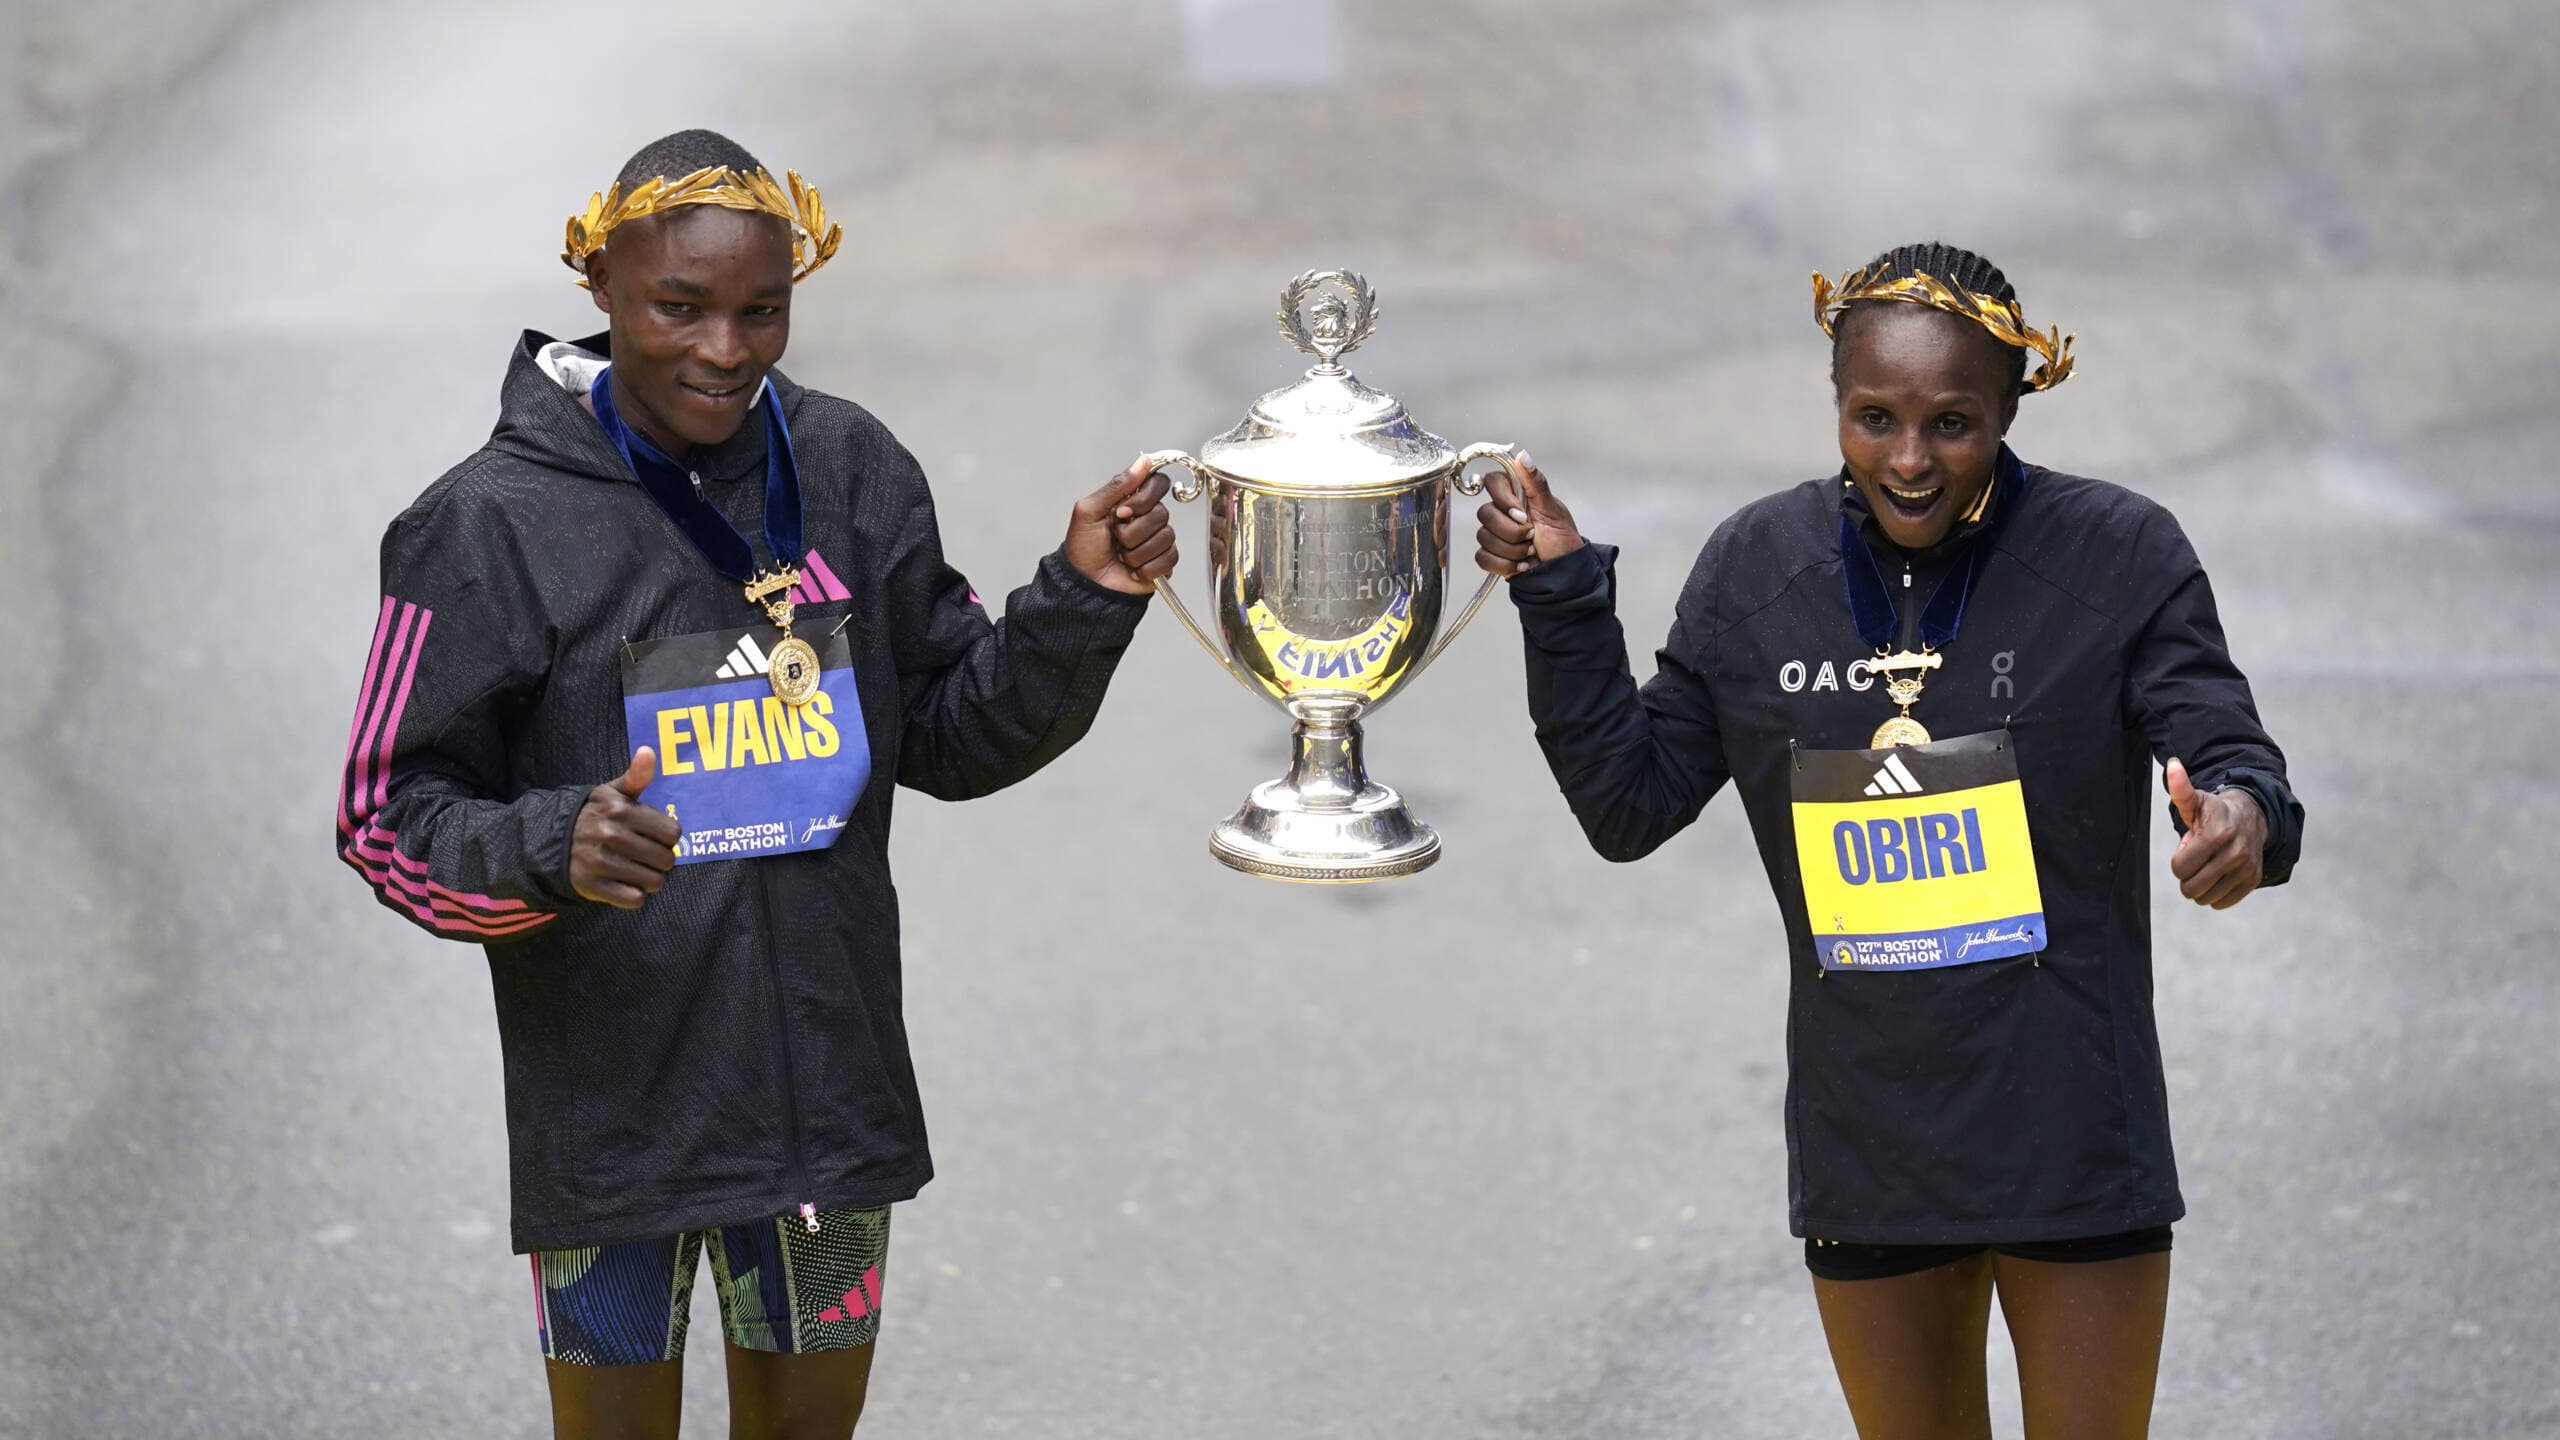 Here's a recap of what happened during the 127th Boston Marathon | WBUR News